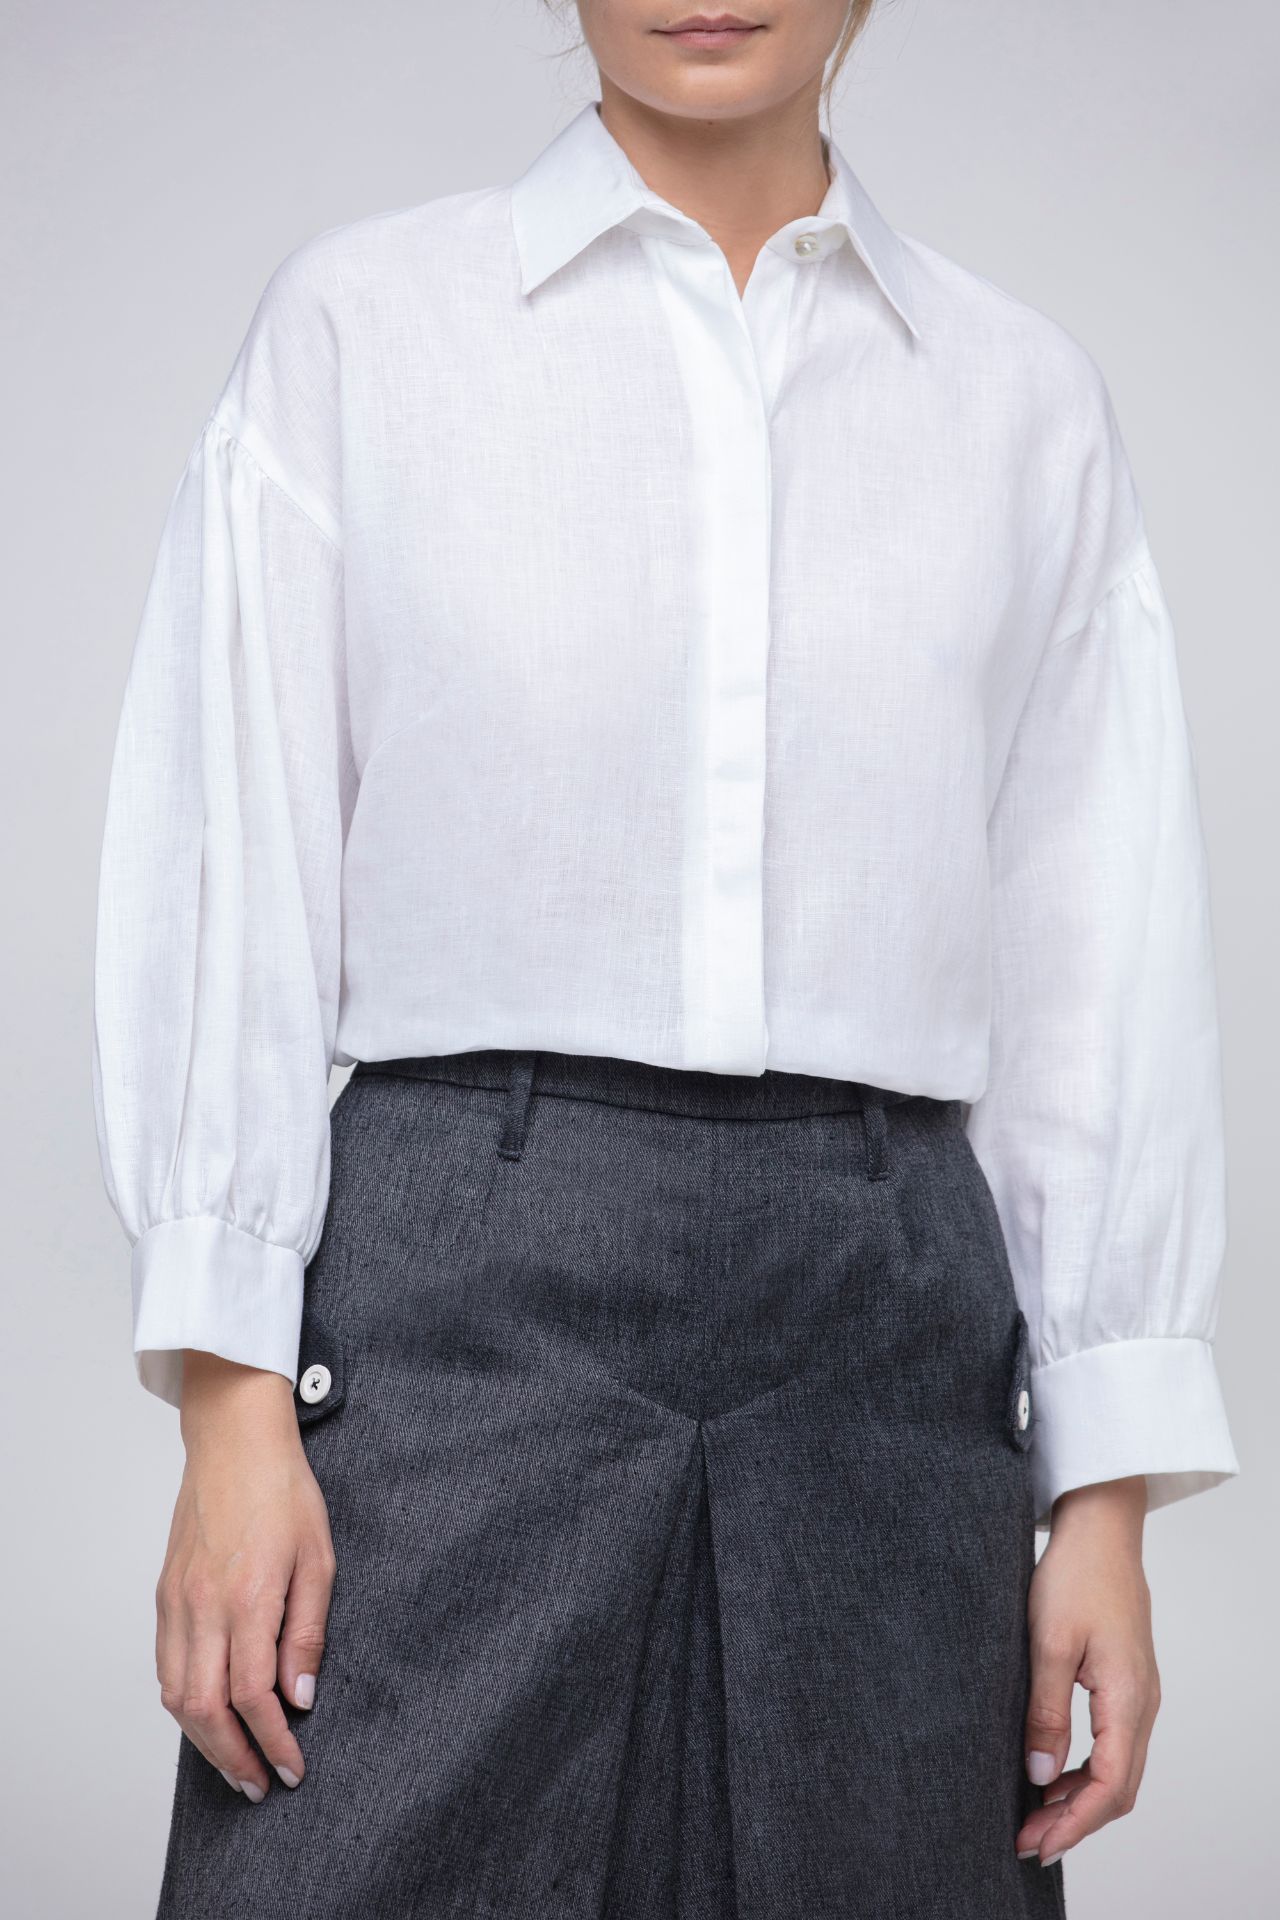 white linen button down shirt